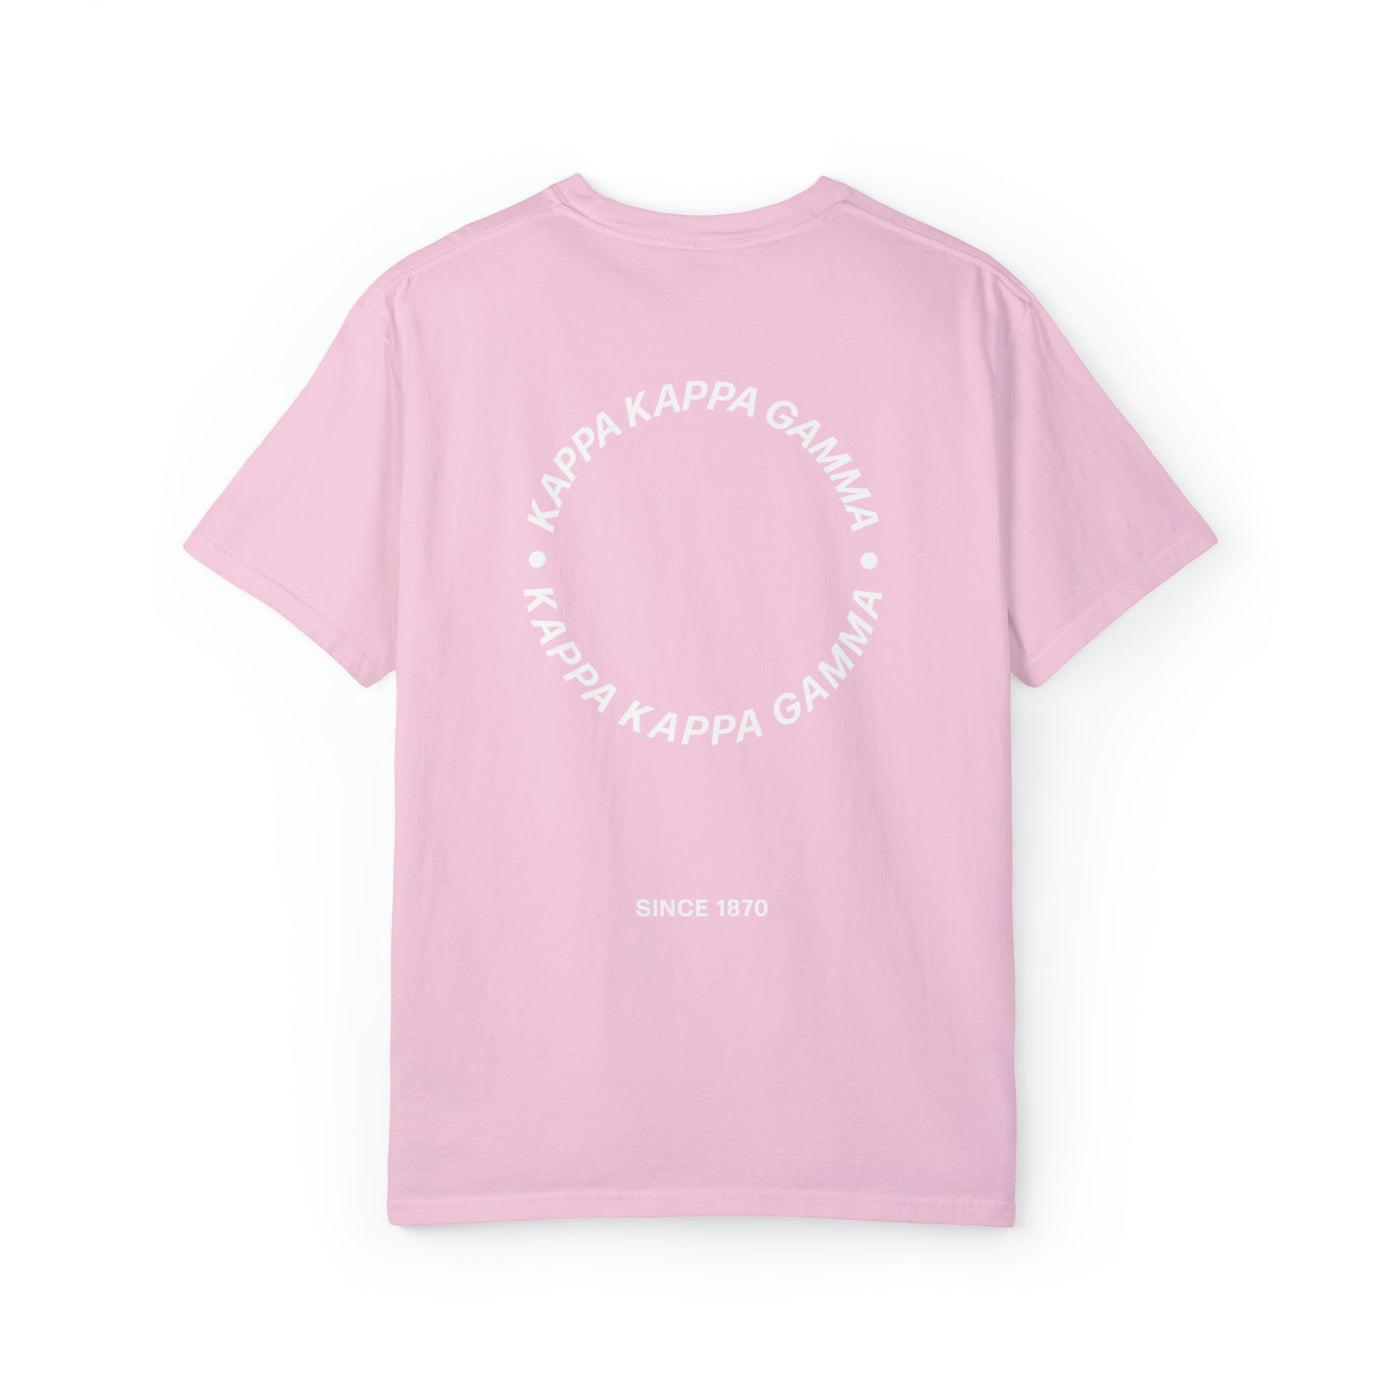 Kappa Kappa Gamma Simple Circle Sorority T-shirt